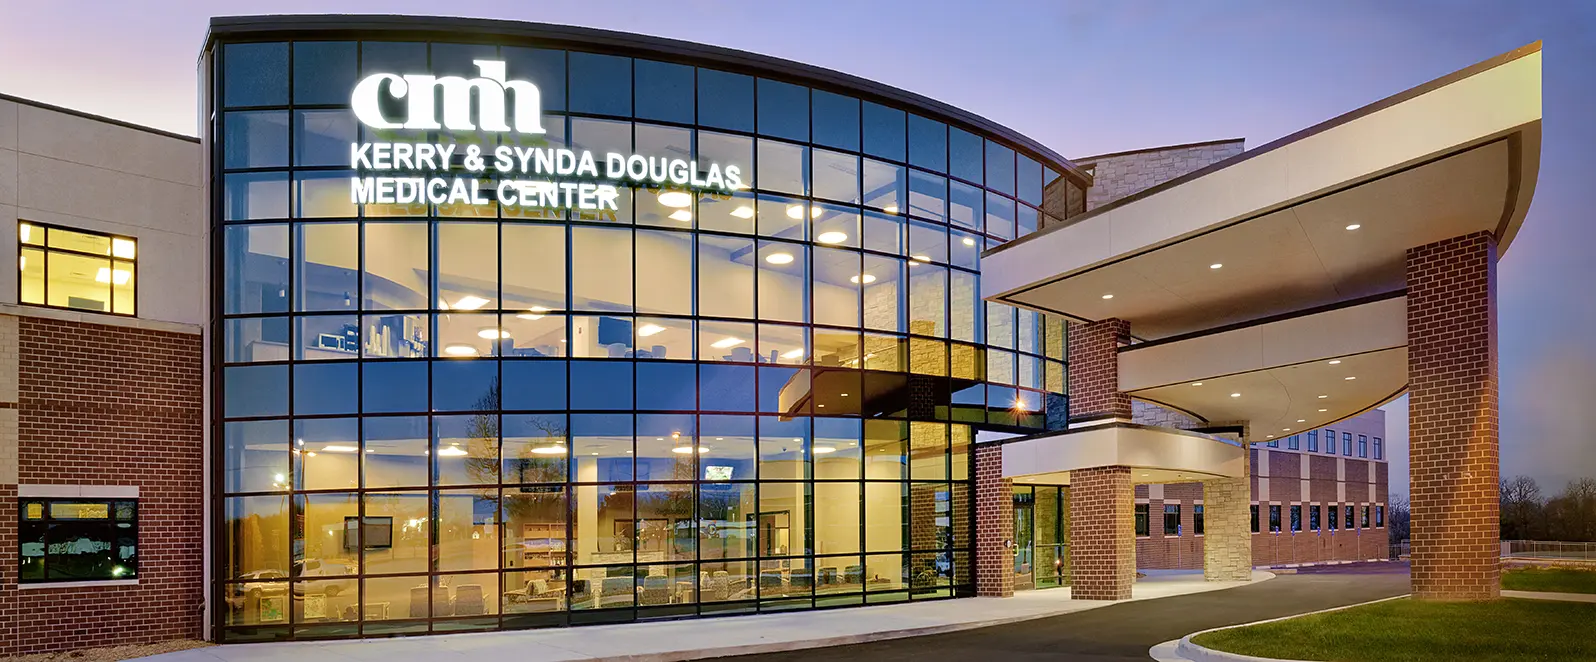 CMH Orthopedic & Spine Center at Douglas Medical Center building exterior